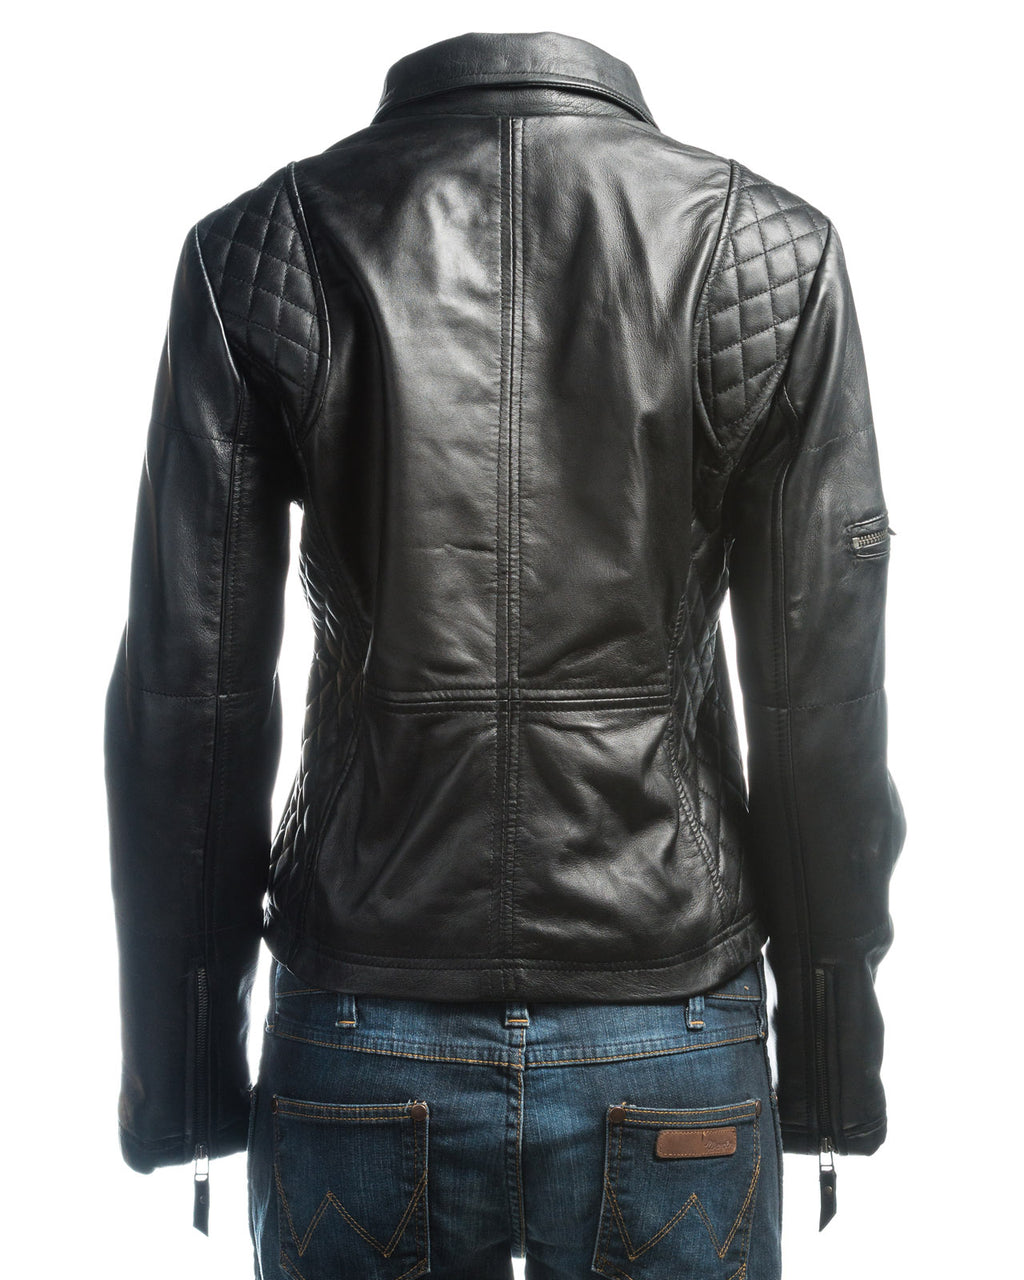 Ladies Black Slim Fit Diamond Quilted Biker Style Leather Jacket With Detachable Hood: Flora